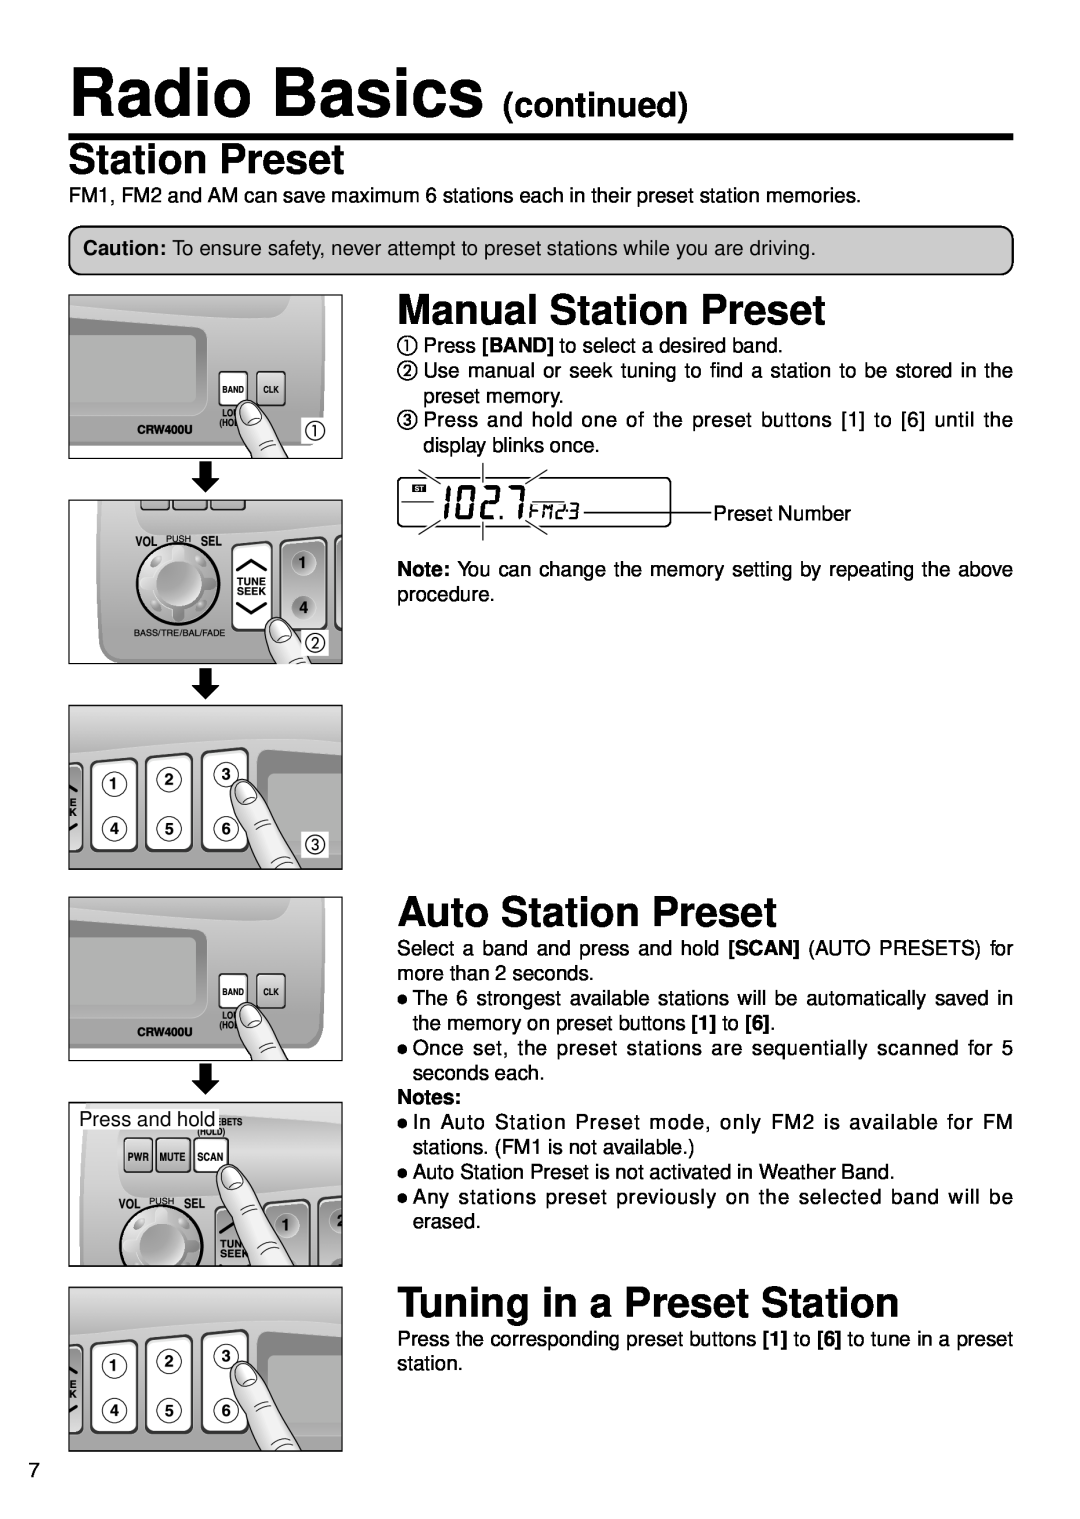 Panasonic CR-W400U Radio Basics continued, Manual Station Preset, Auto Station Preset, Tuning in a Preset Station 